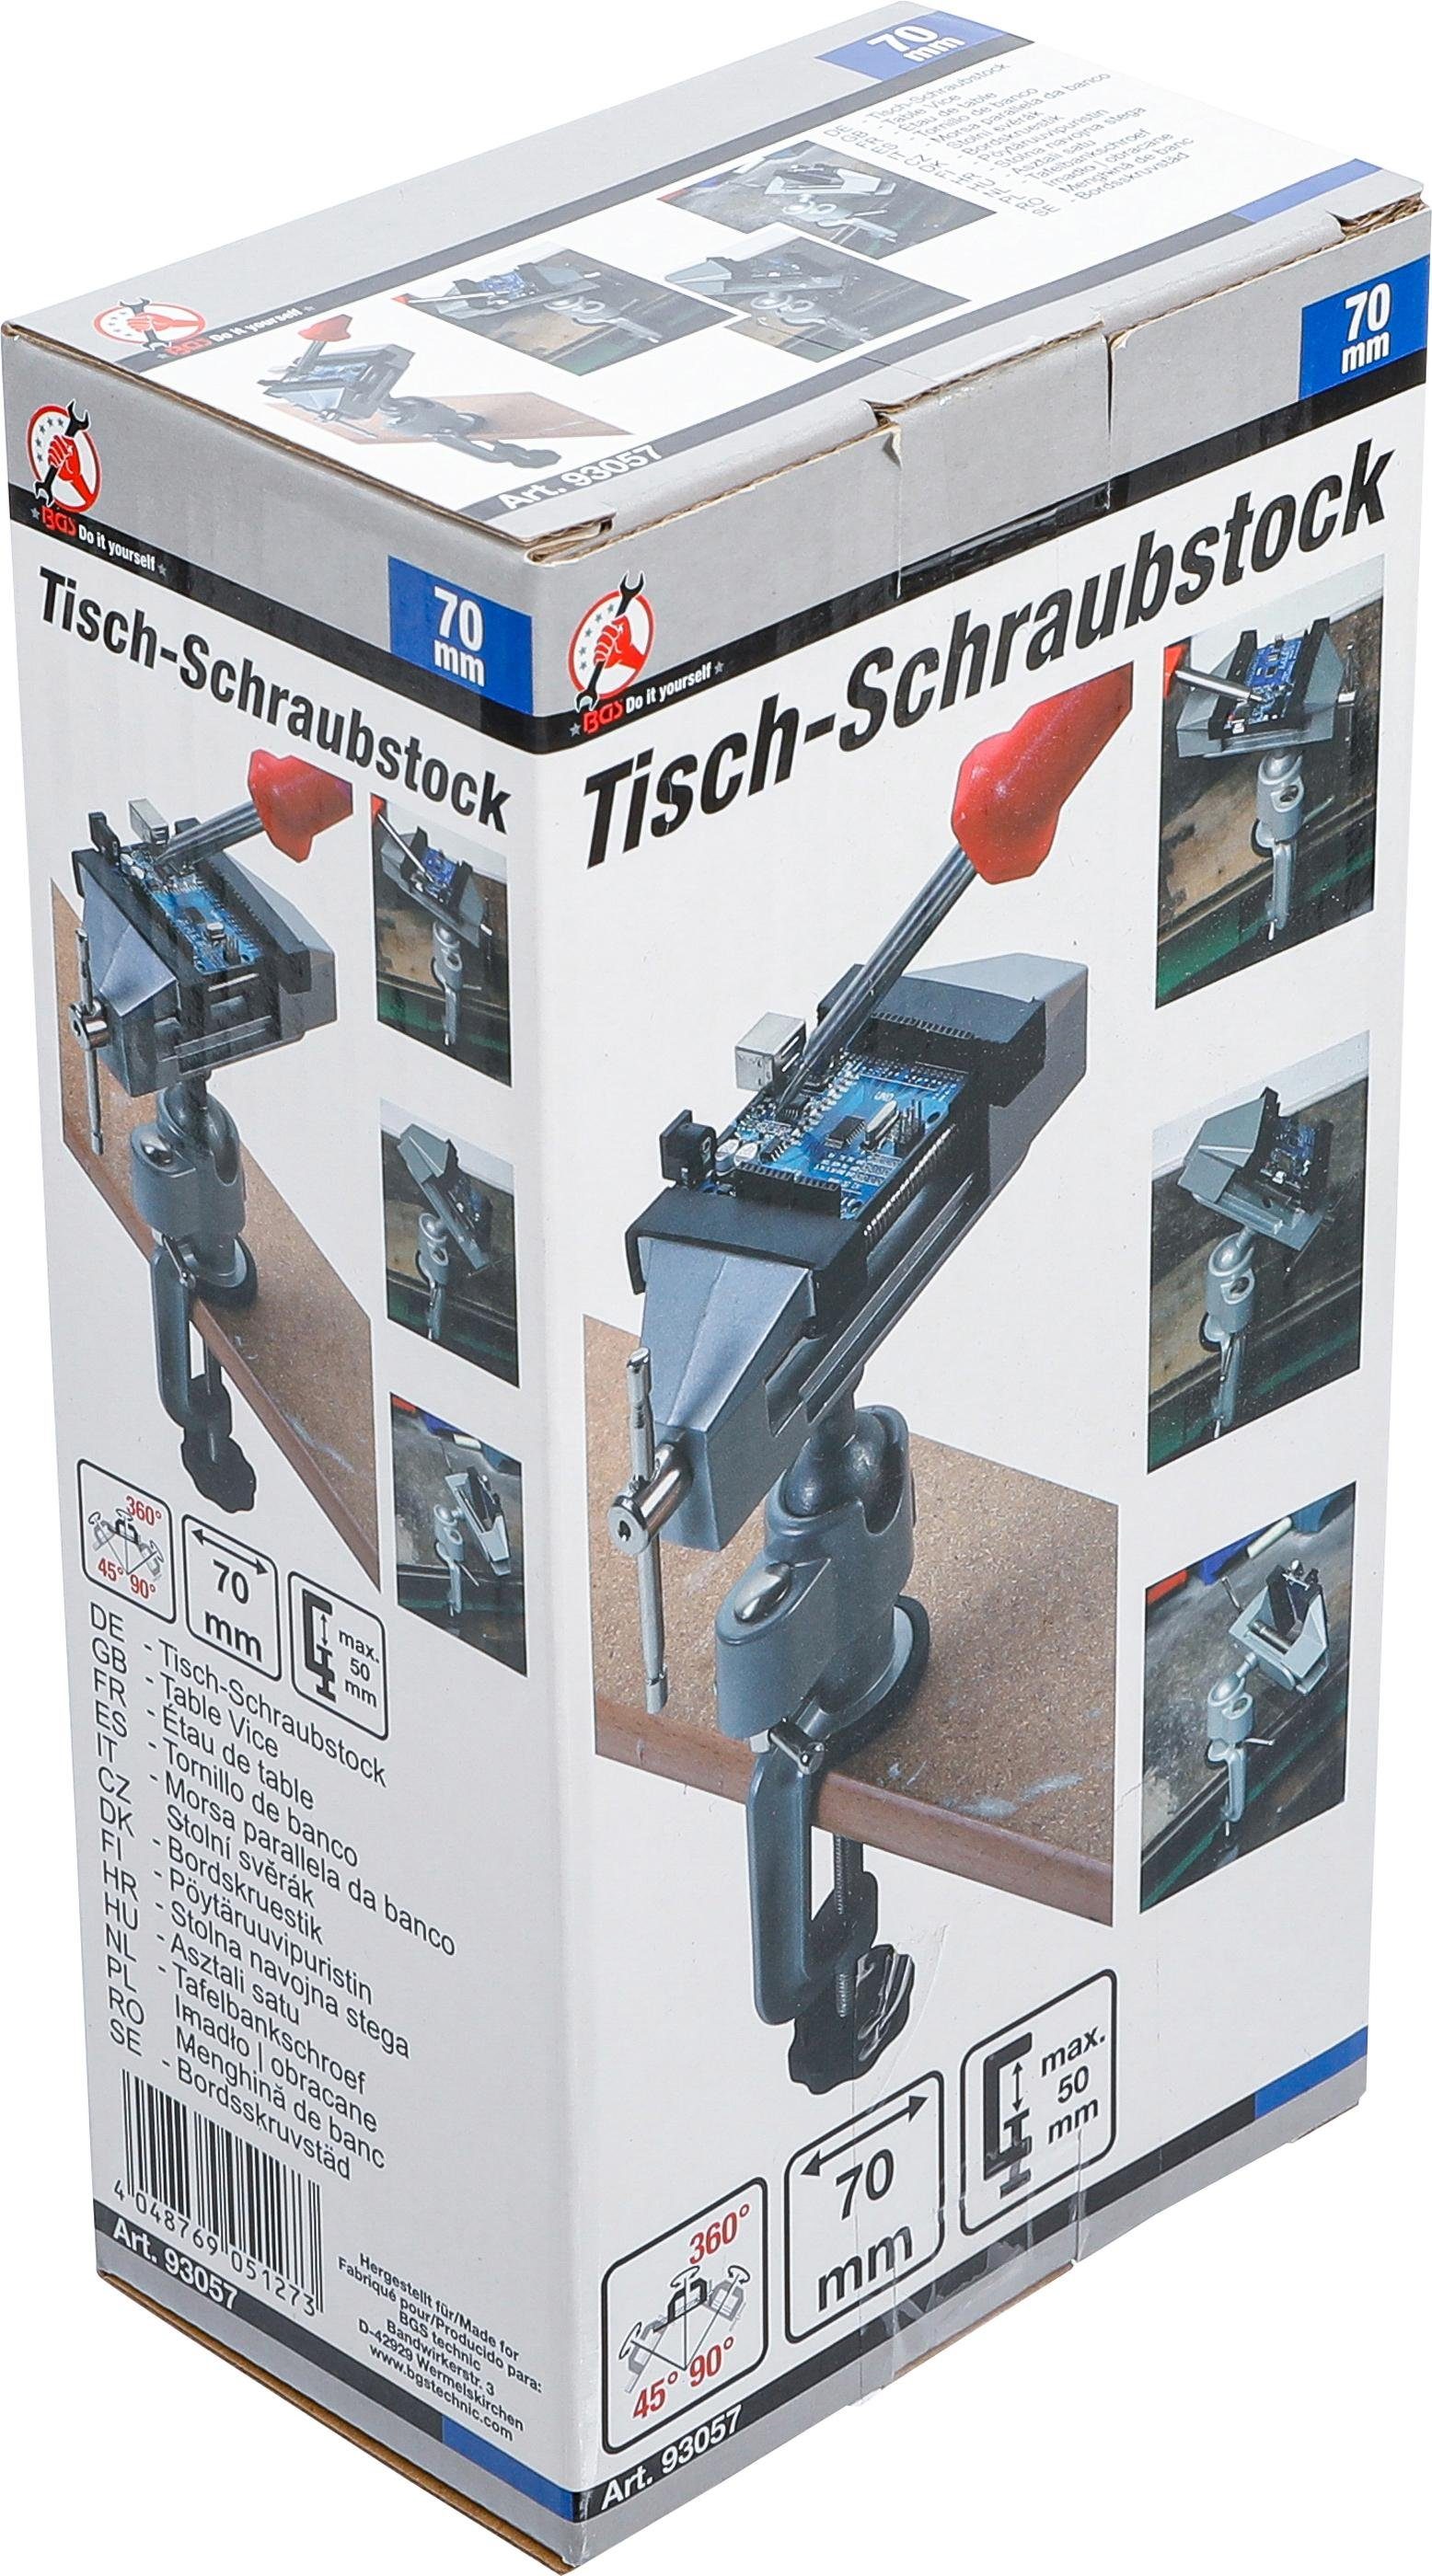 BGS technic Schraubstock Tisch-Schraubstock, Backen schwenkbar, mm 70